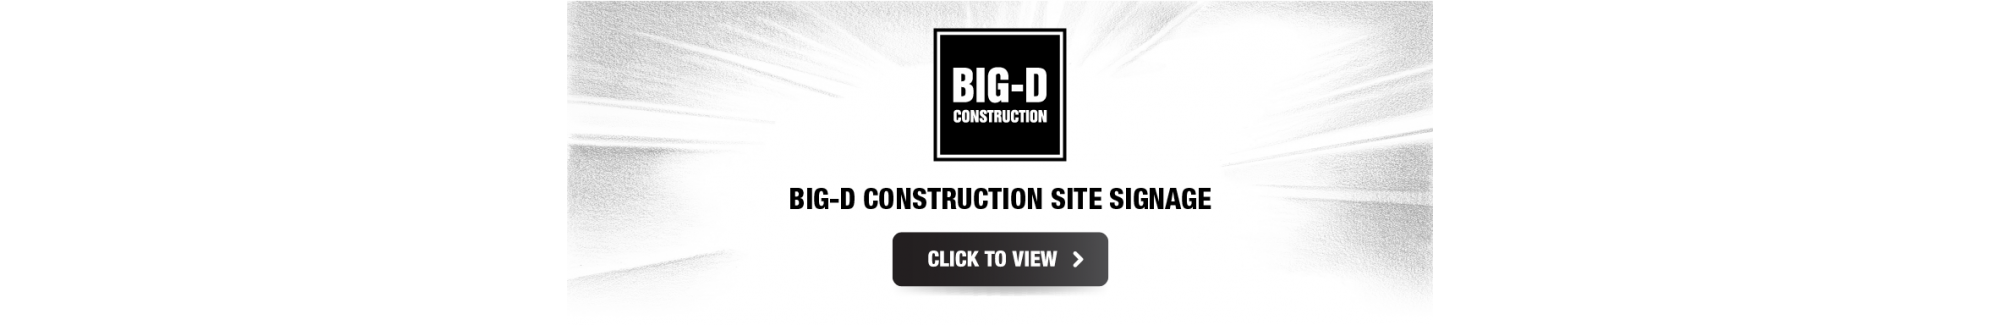 Big-D Construction Banner